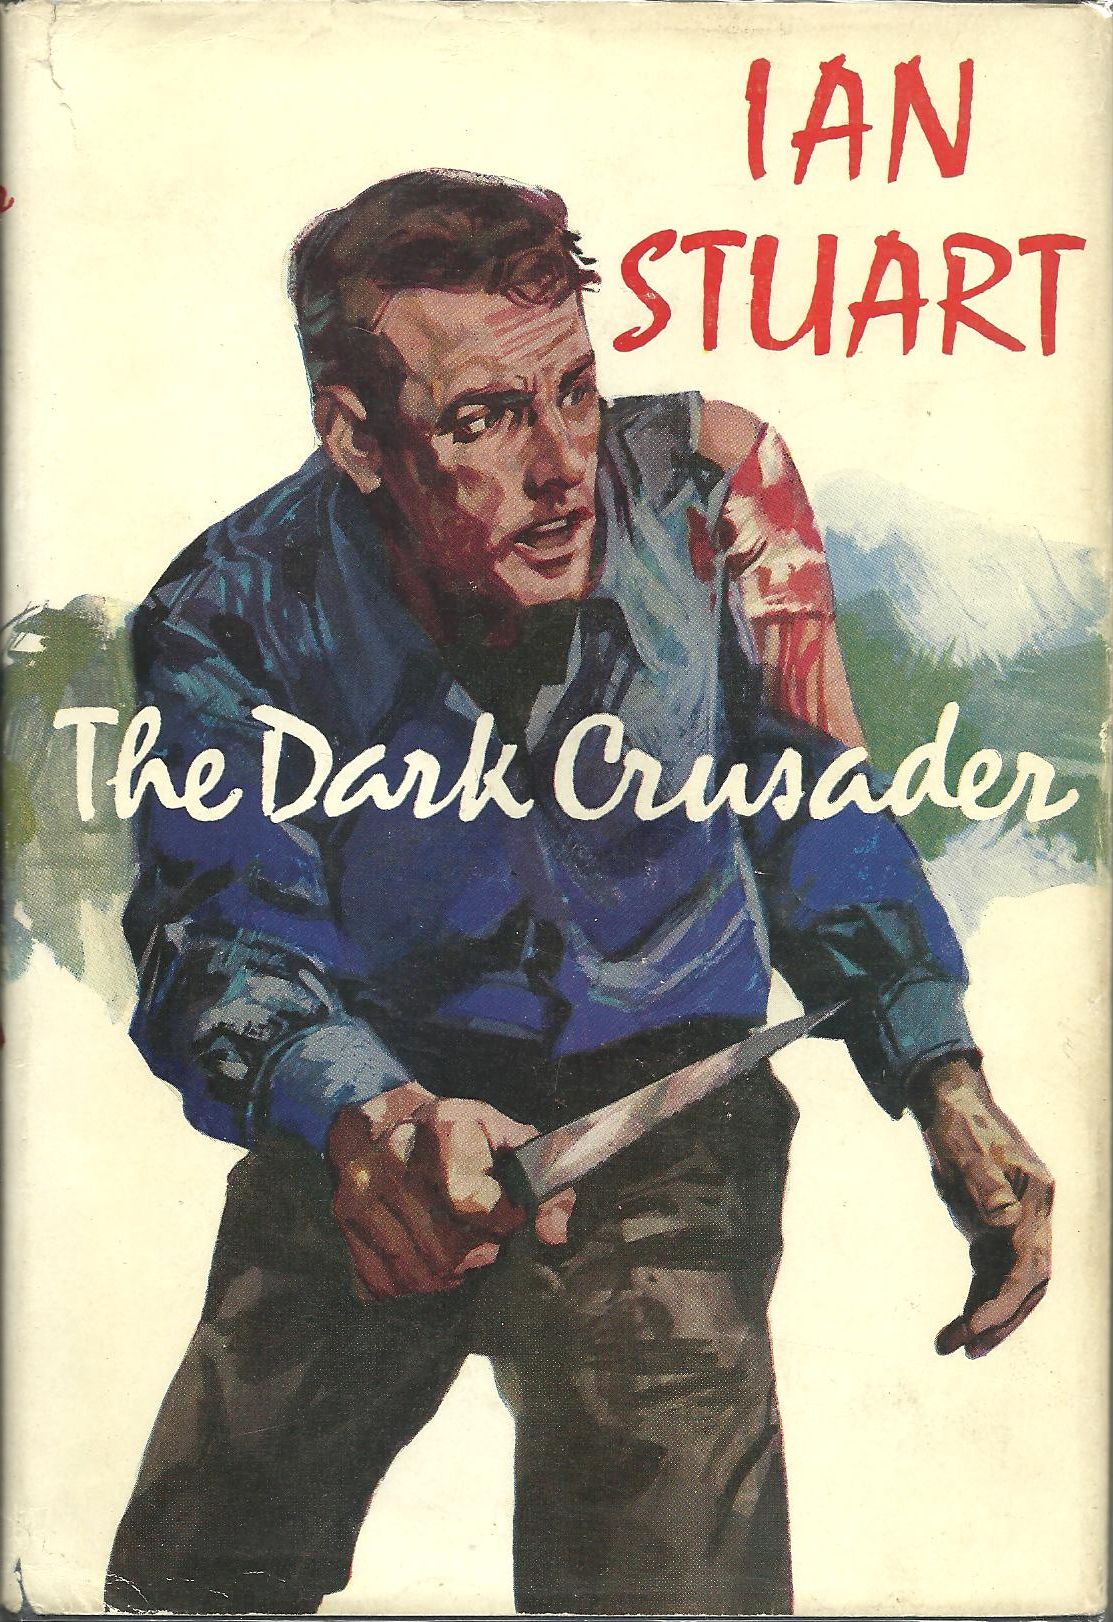 The Dark Crusader - UK first edition